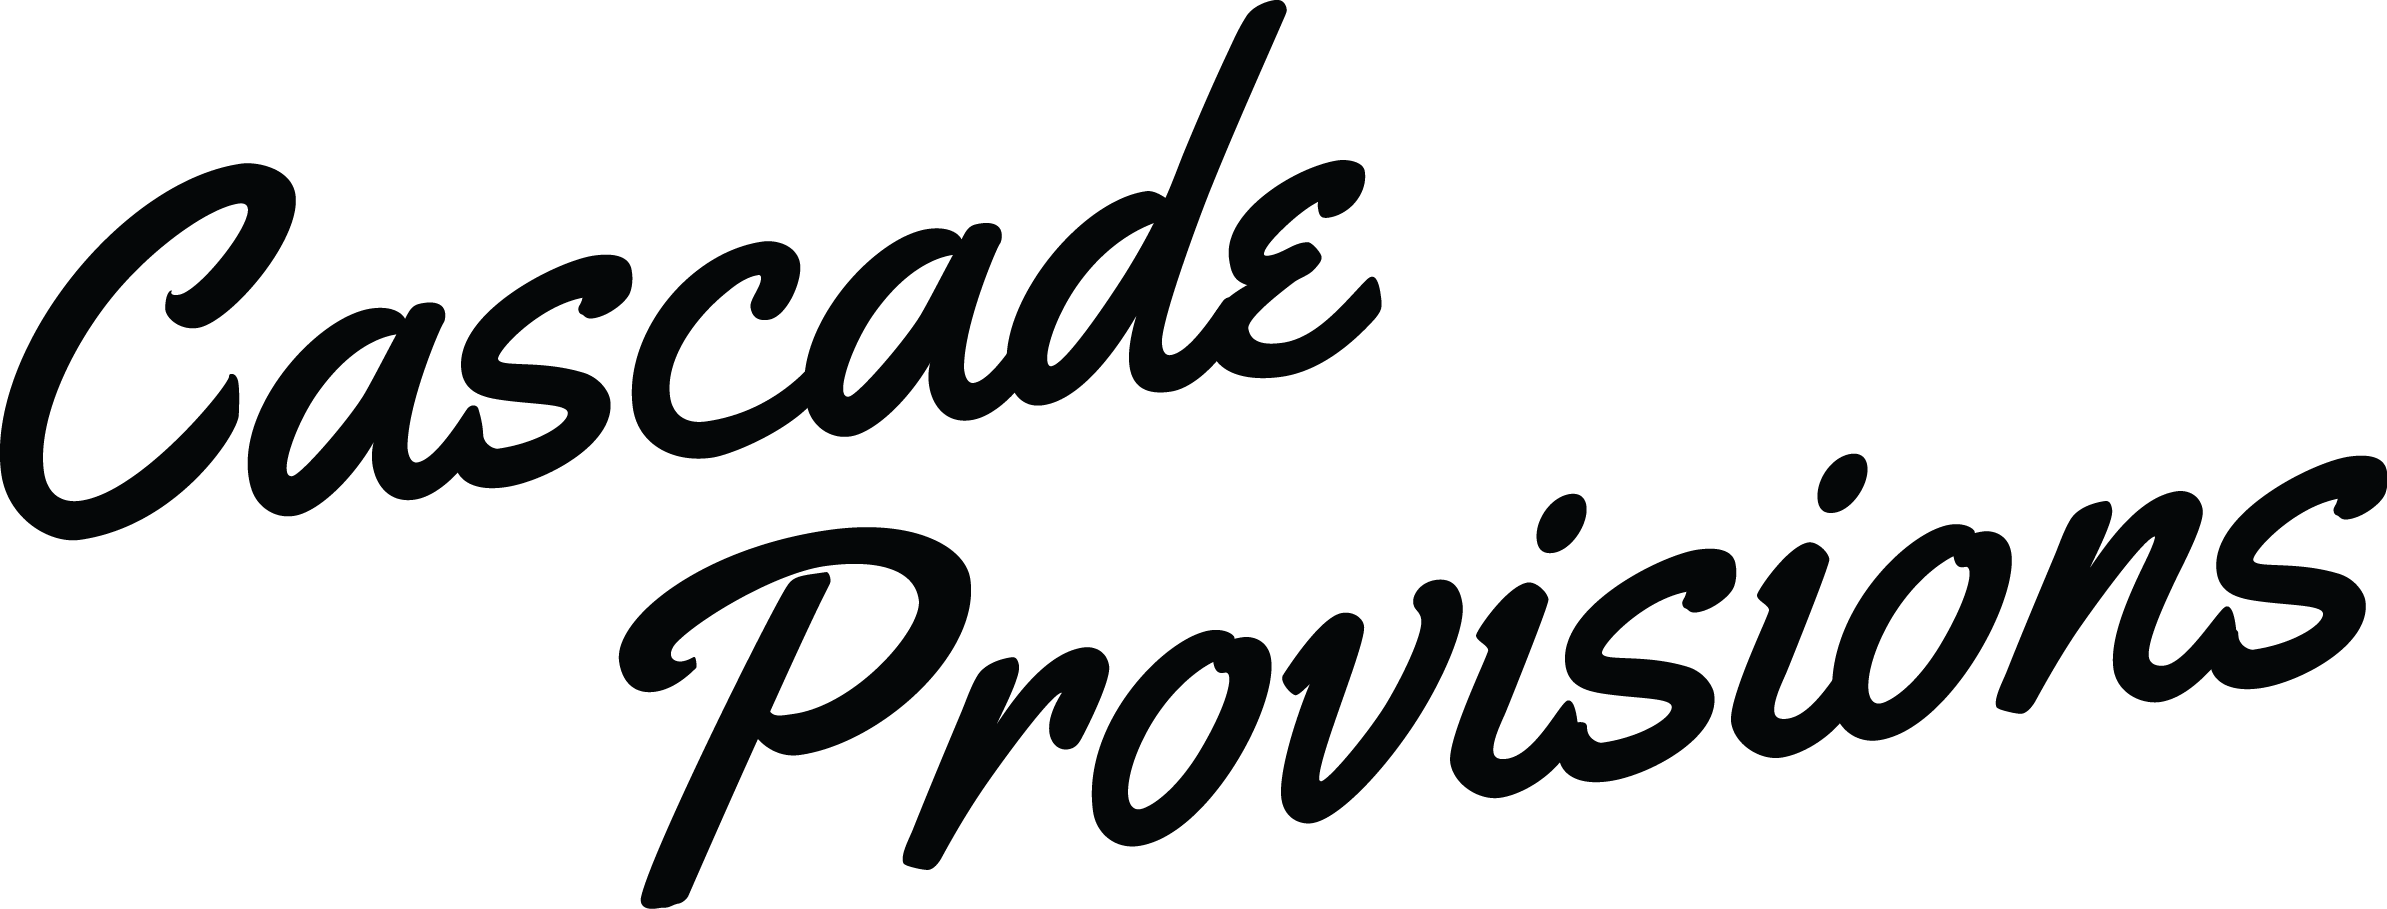 Cascade Provisions Wholesale  Logo